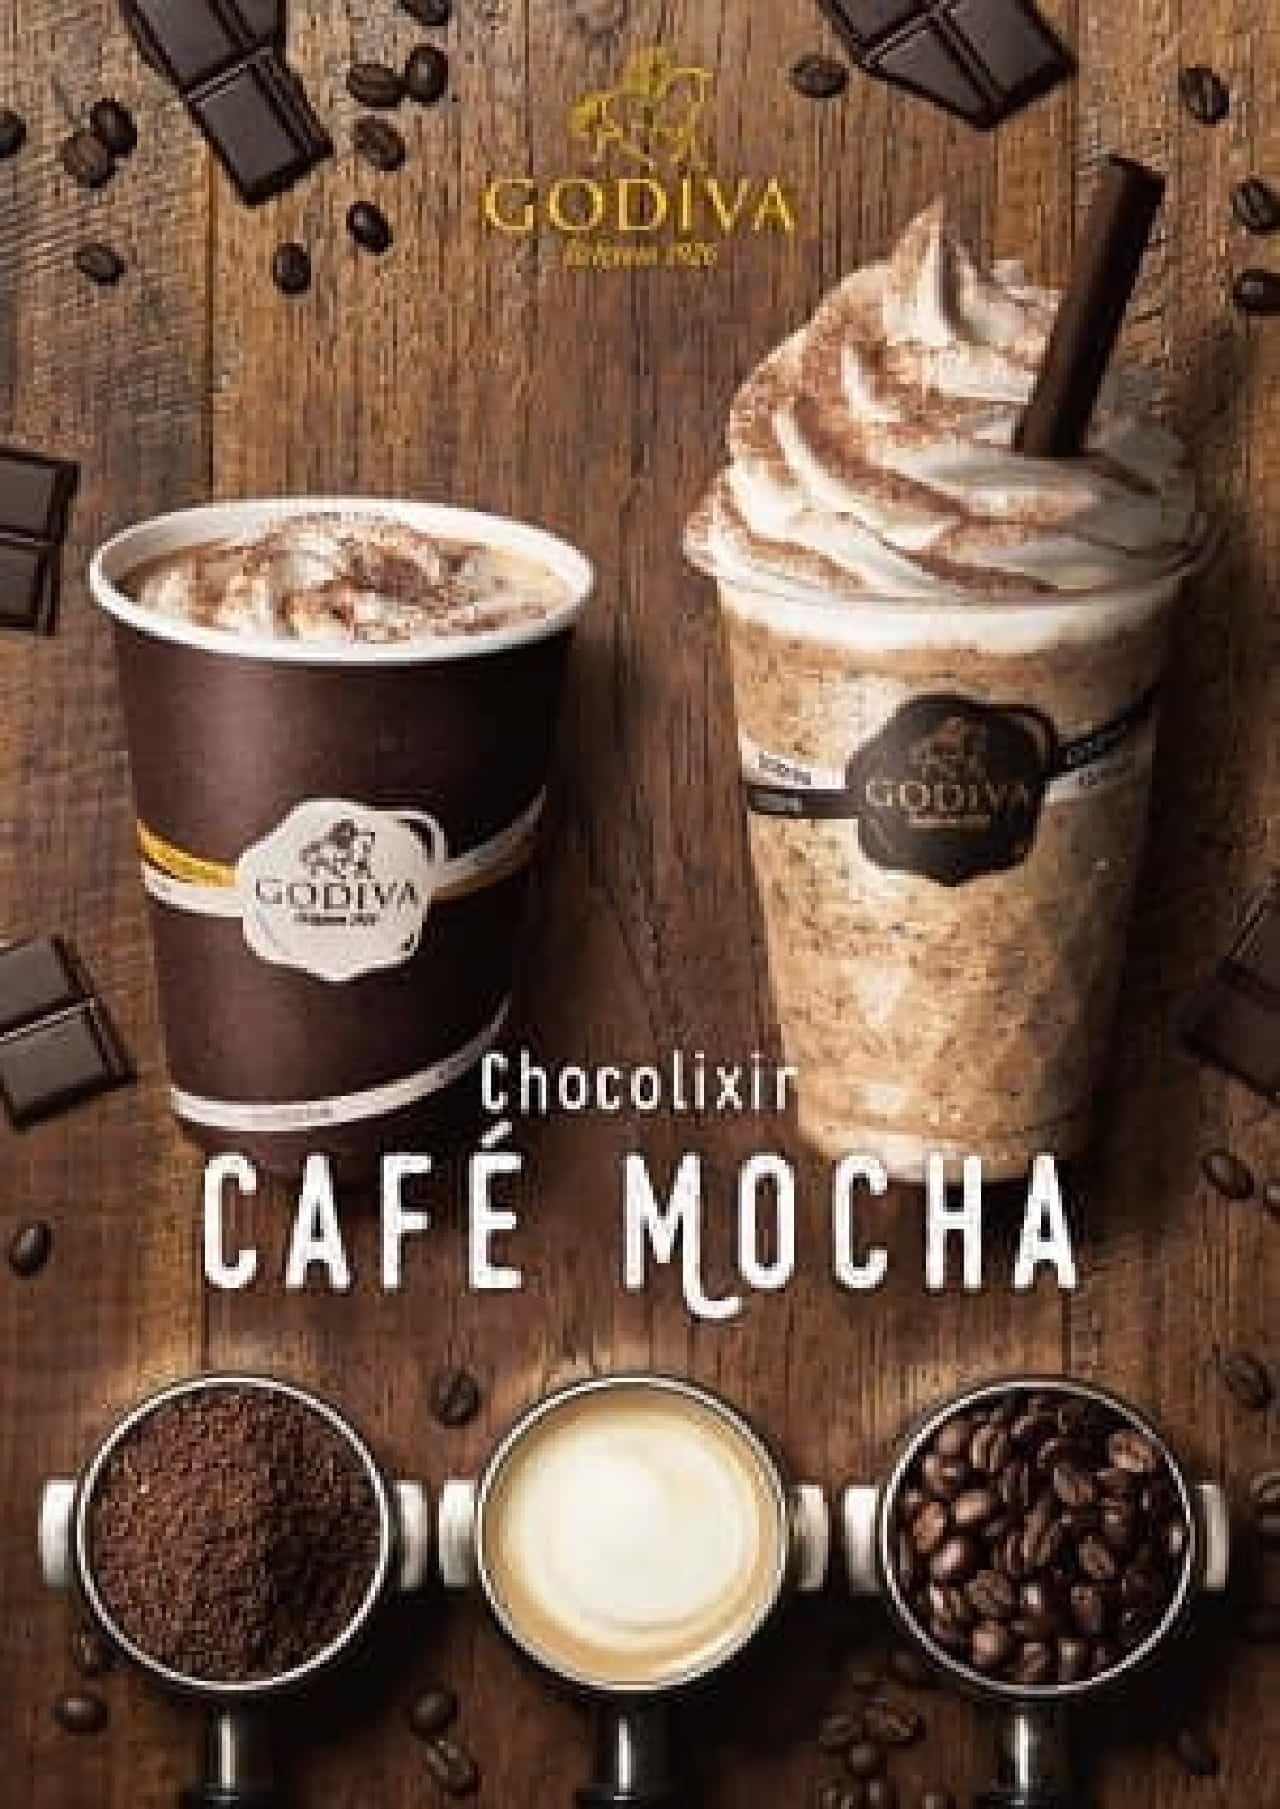 Godiva "Chocolate Dark Chocolate Cafe Mocha" and "Hot Chocolate Dark Chocolate Cafe Mocha"